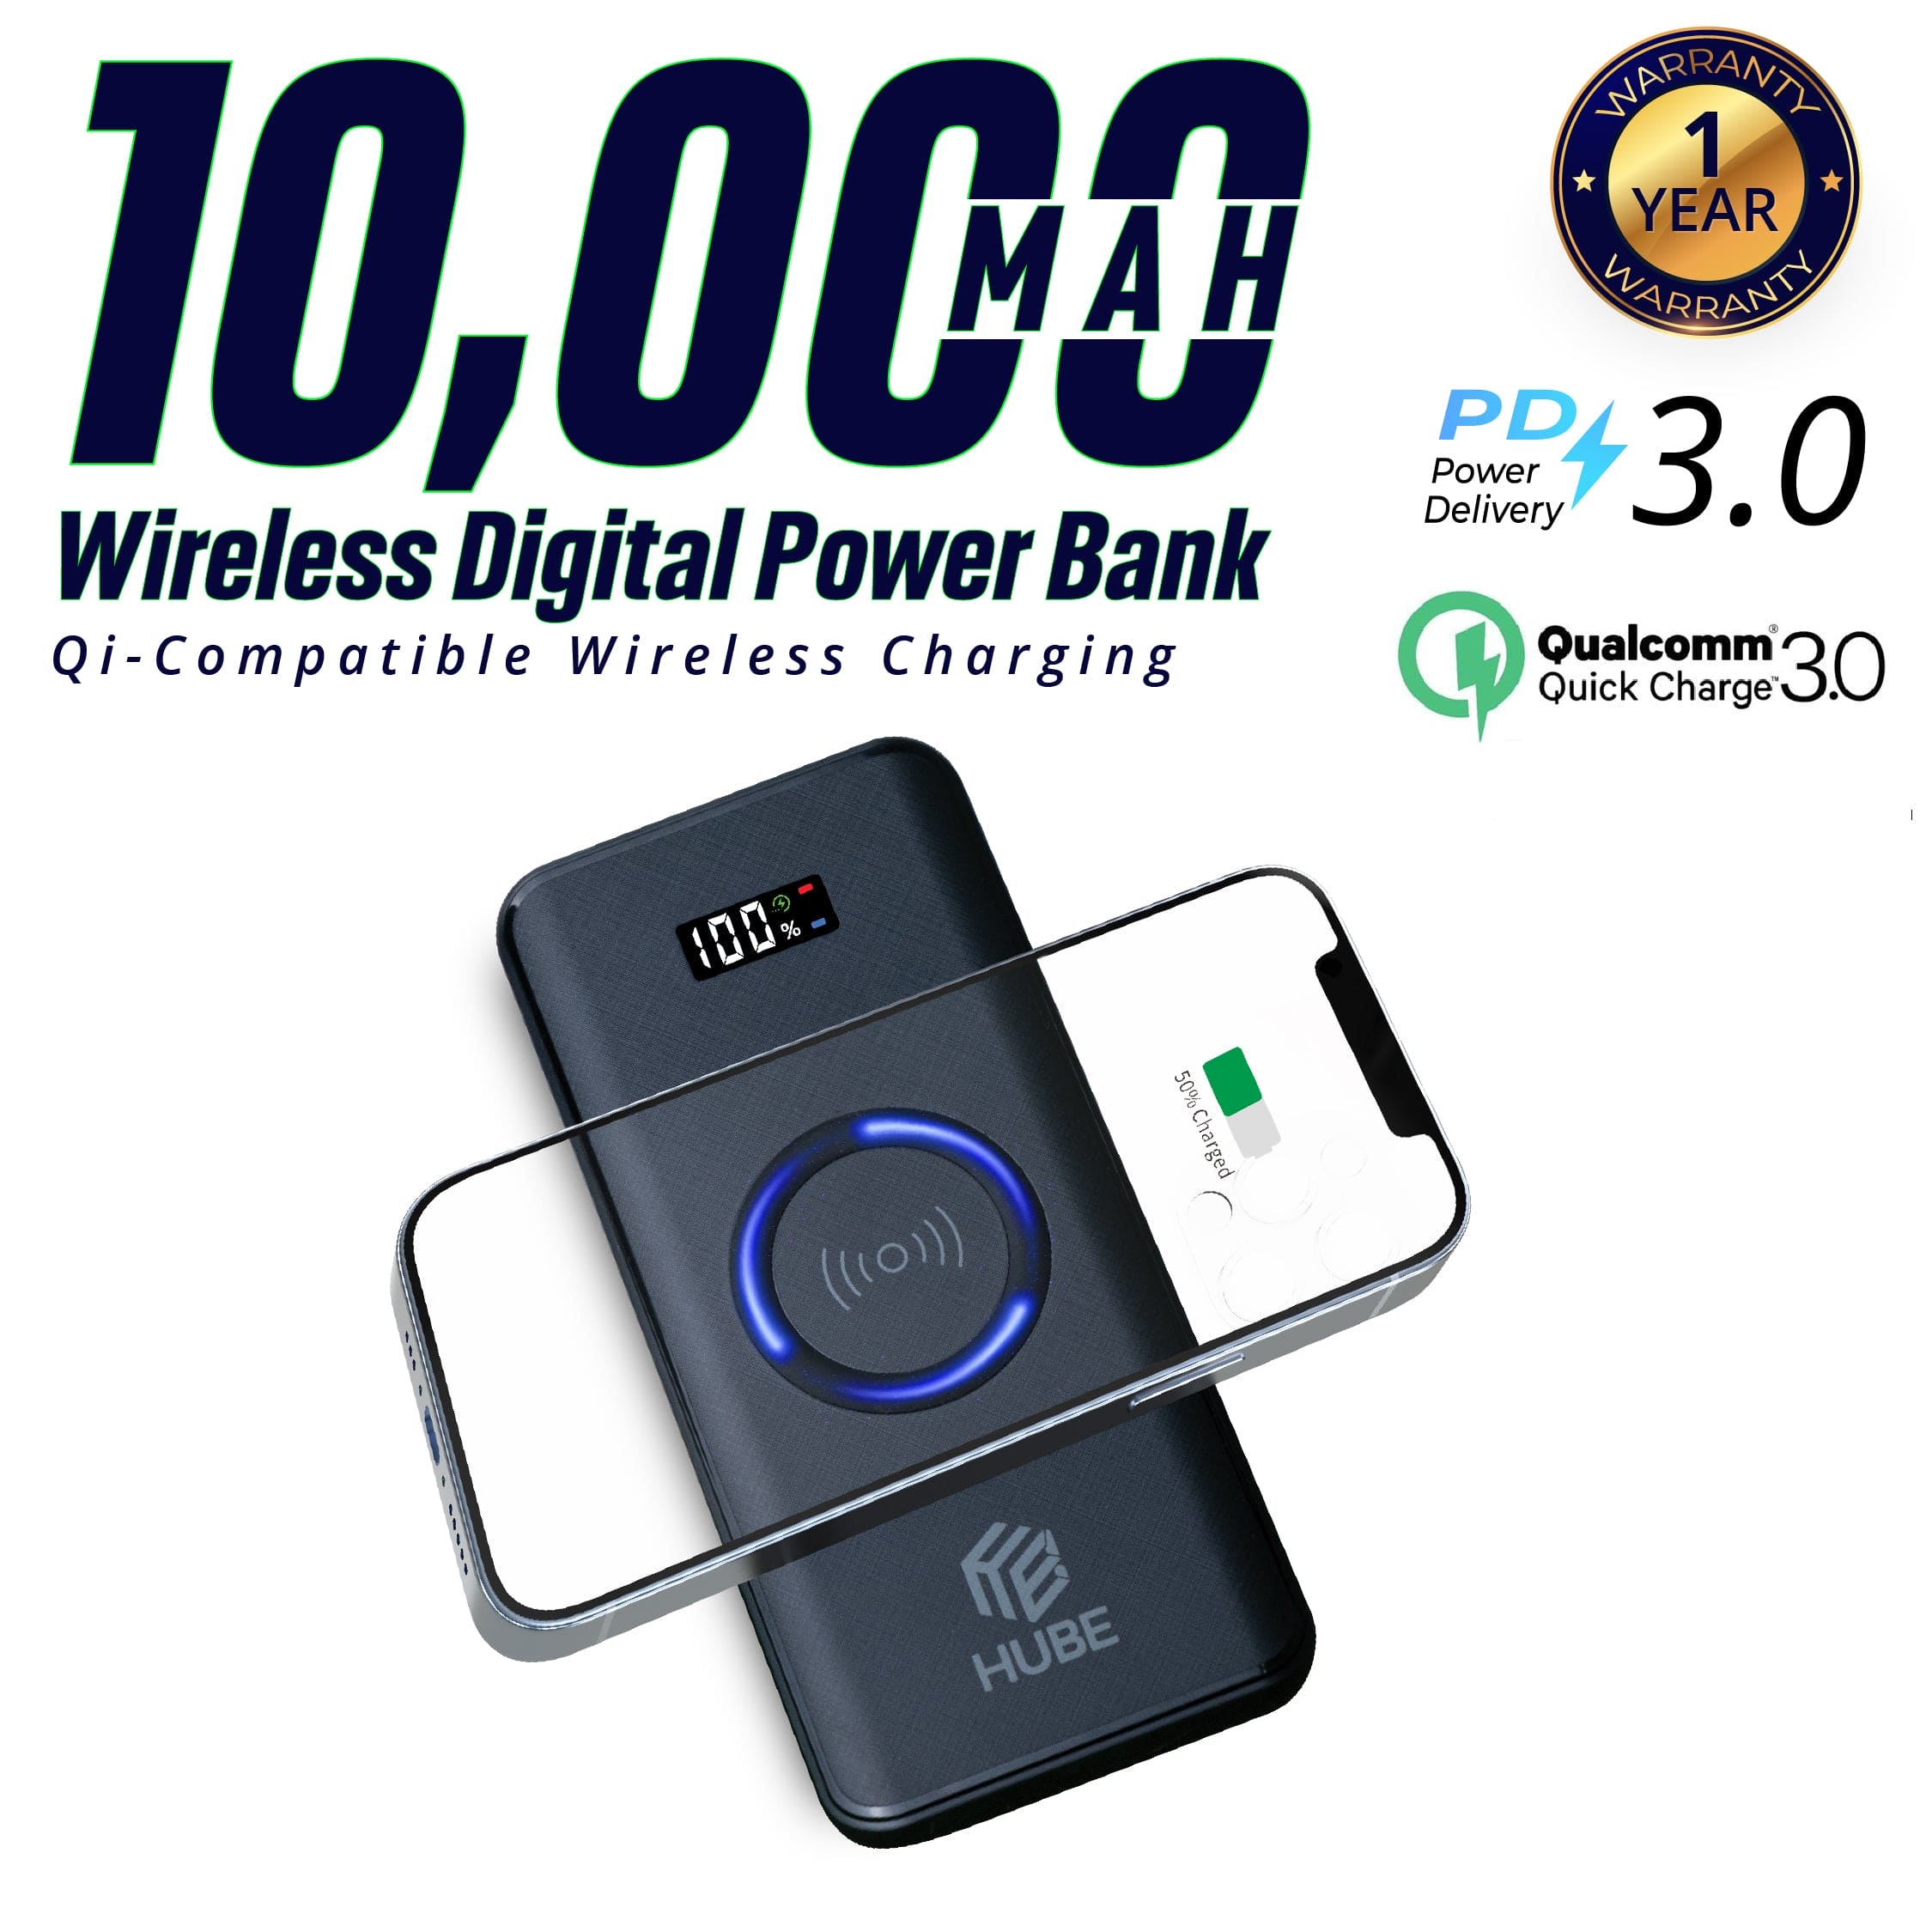 Wireless Charging 10,000 mAh Fast Charging Power Bank – Hube (Pvt.) Ltd